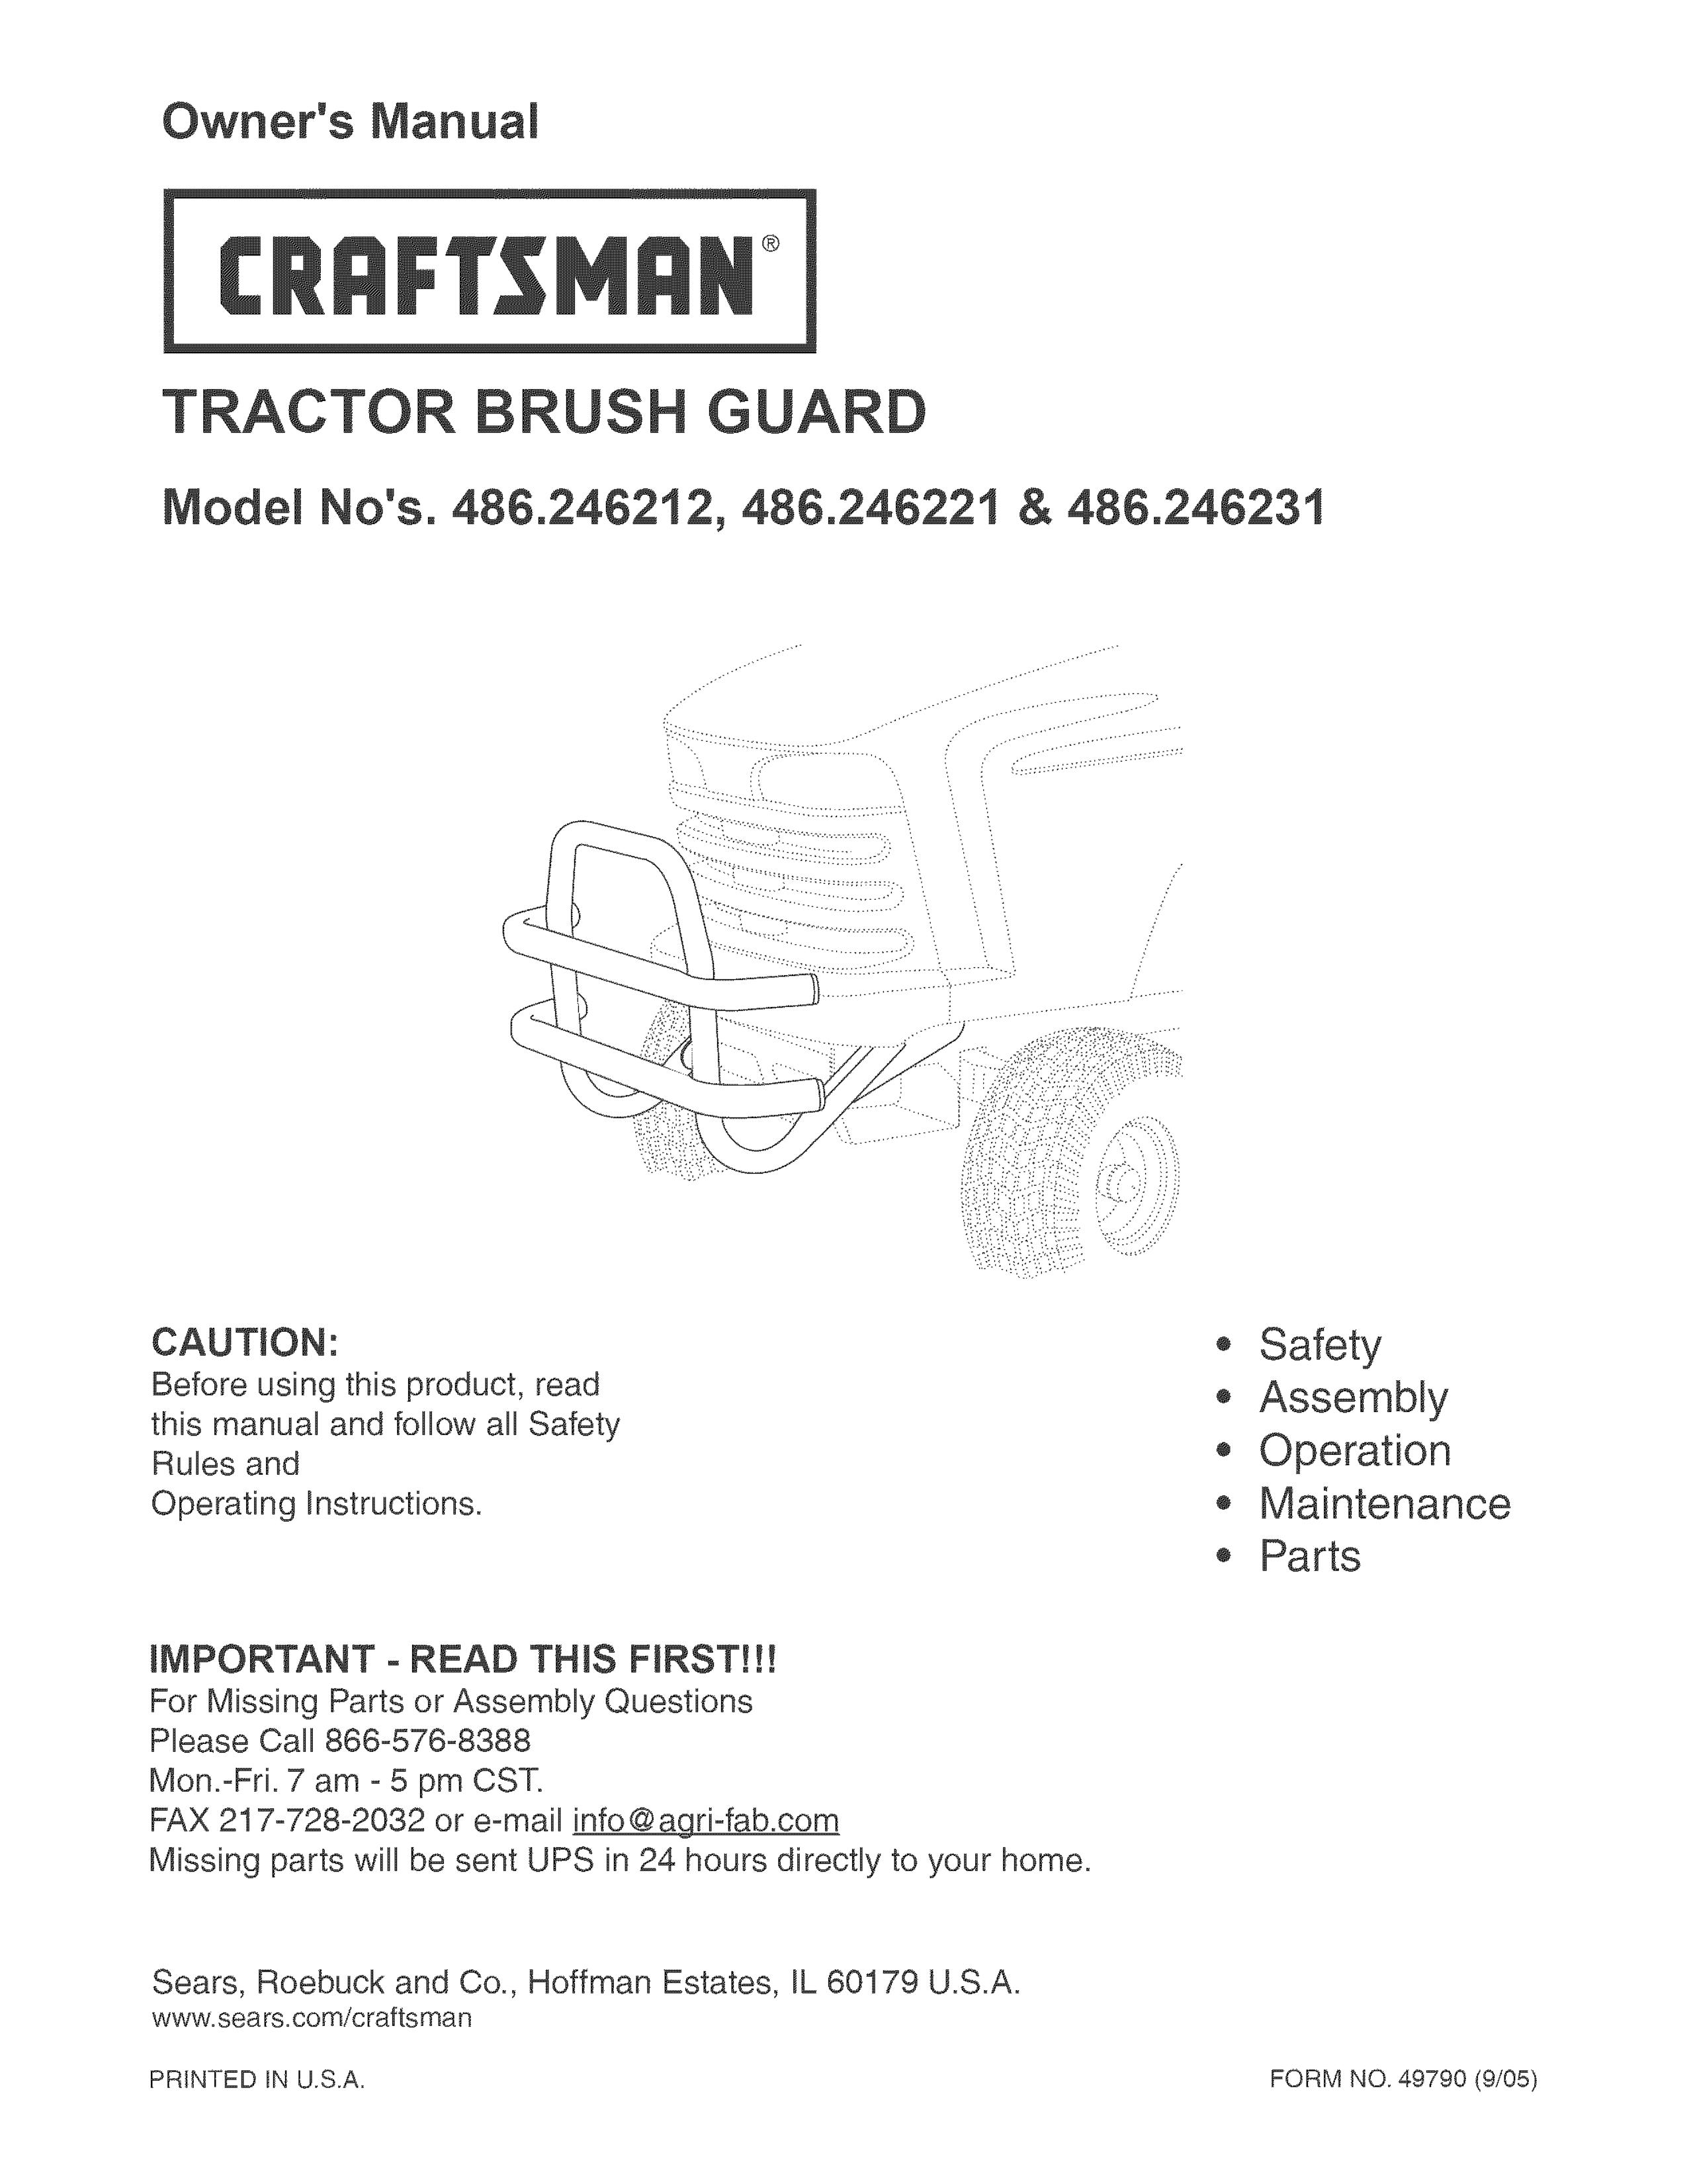 Craftsman 486.246221 Lawn Mower Accessory User Manual